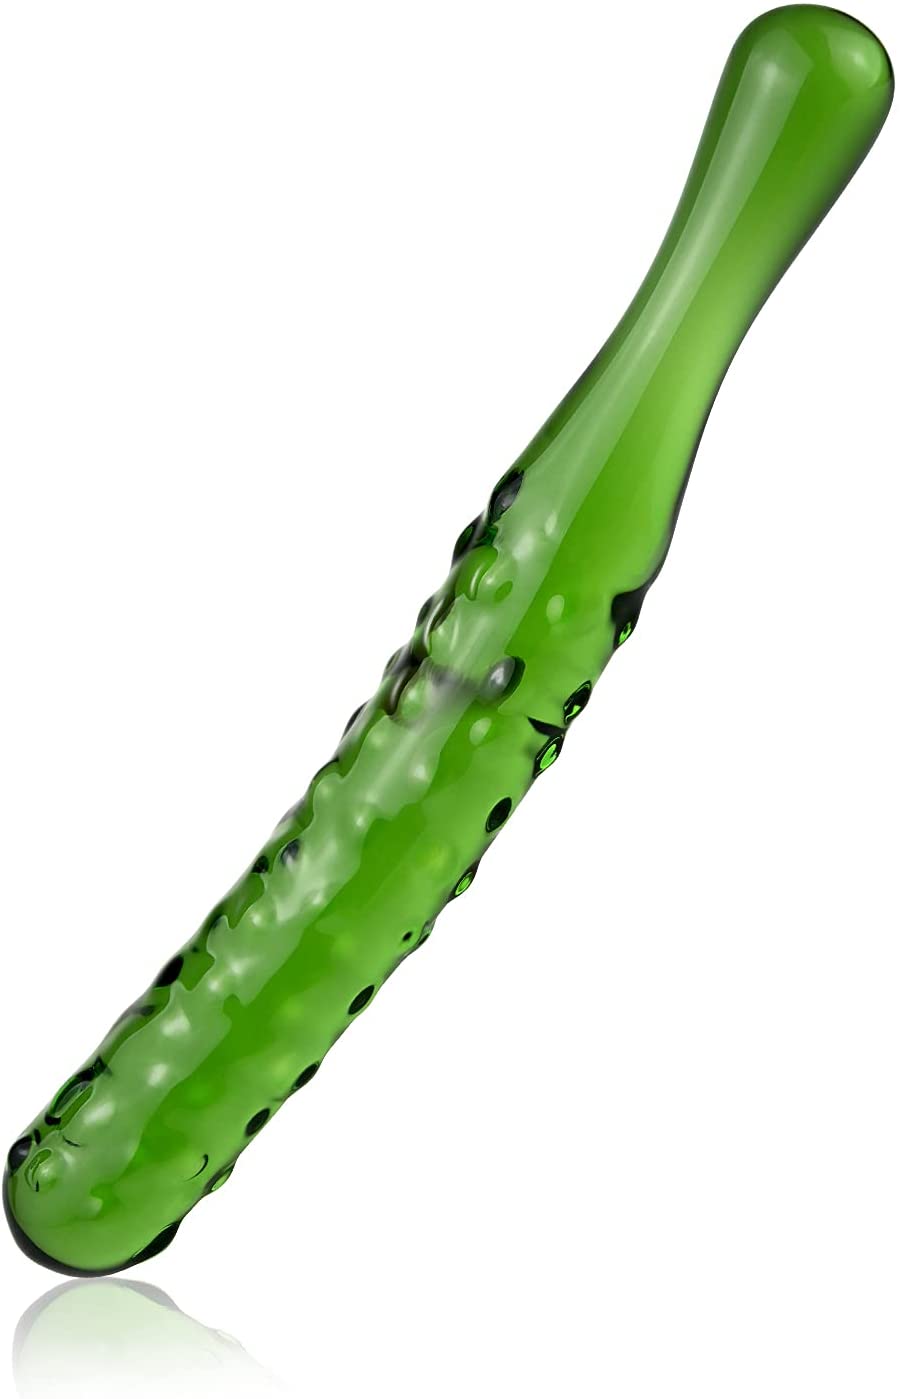 Green Cucumber Shape Crystal Glass Dildo Penis Anus G-Spot Stimulator Anal Plug Unisex Sex Toy Adult Novelty Studded Design